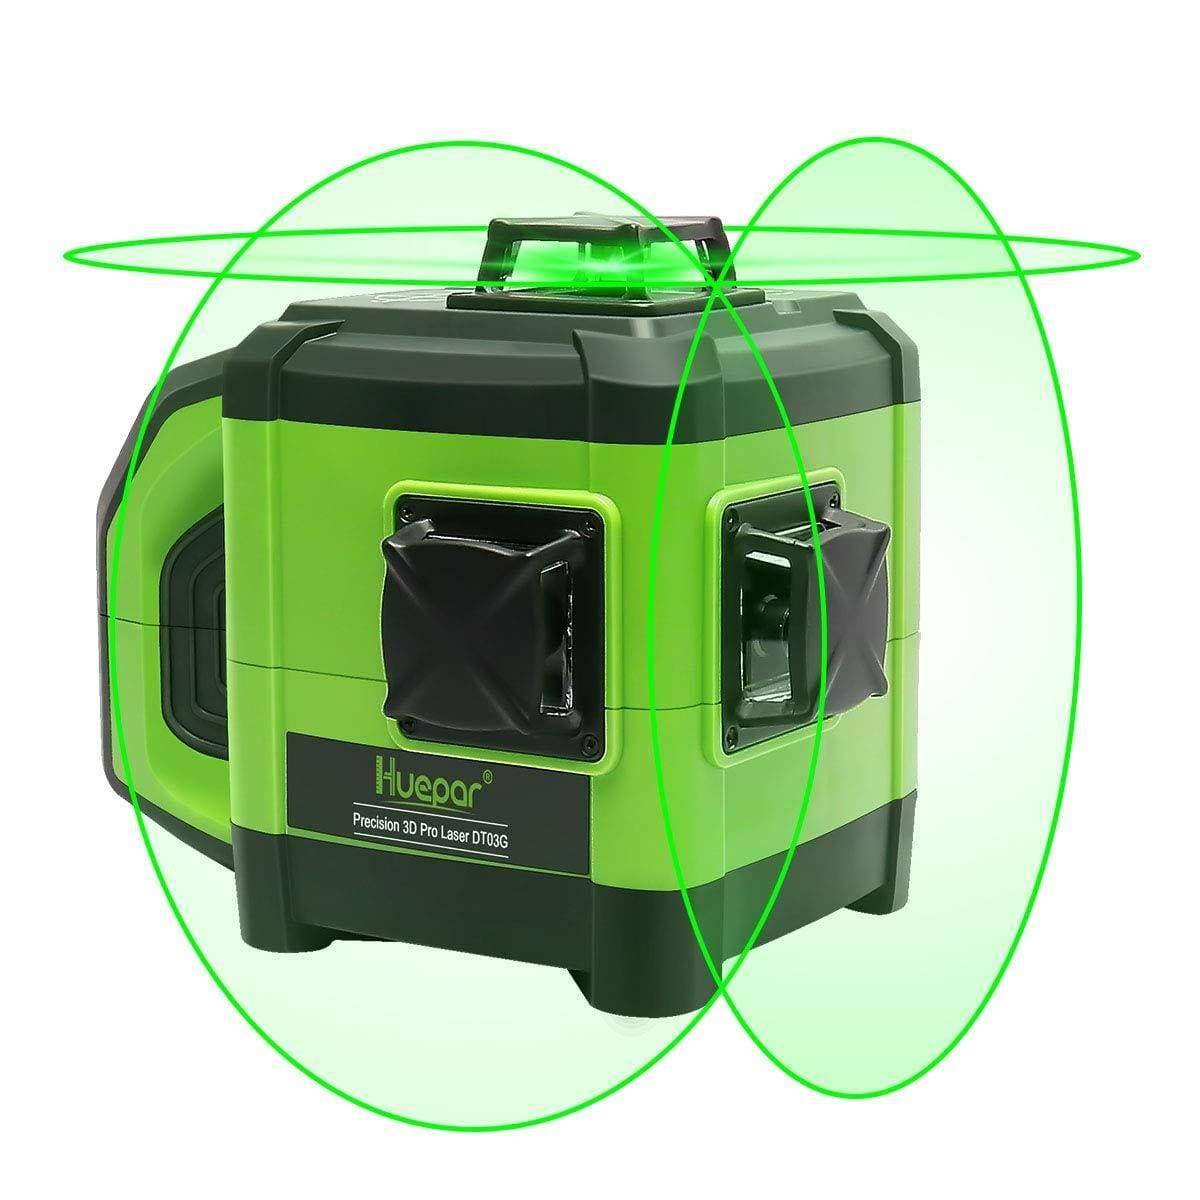 Huepar DT03CG+ 3x360° Dual Slope Function Cross Line Self-Leveling 3D Green Beam Laser Level with Receiver - HUEPAR UK